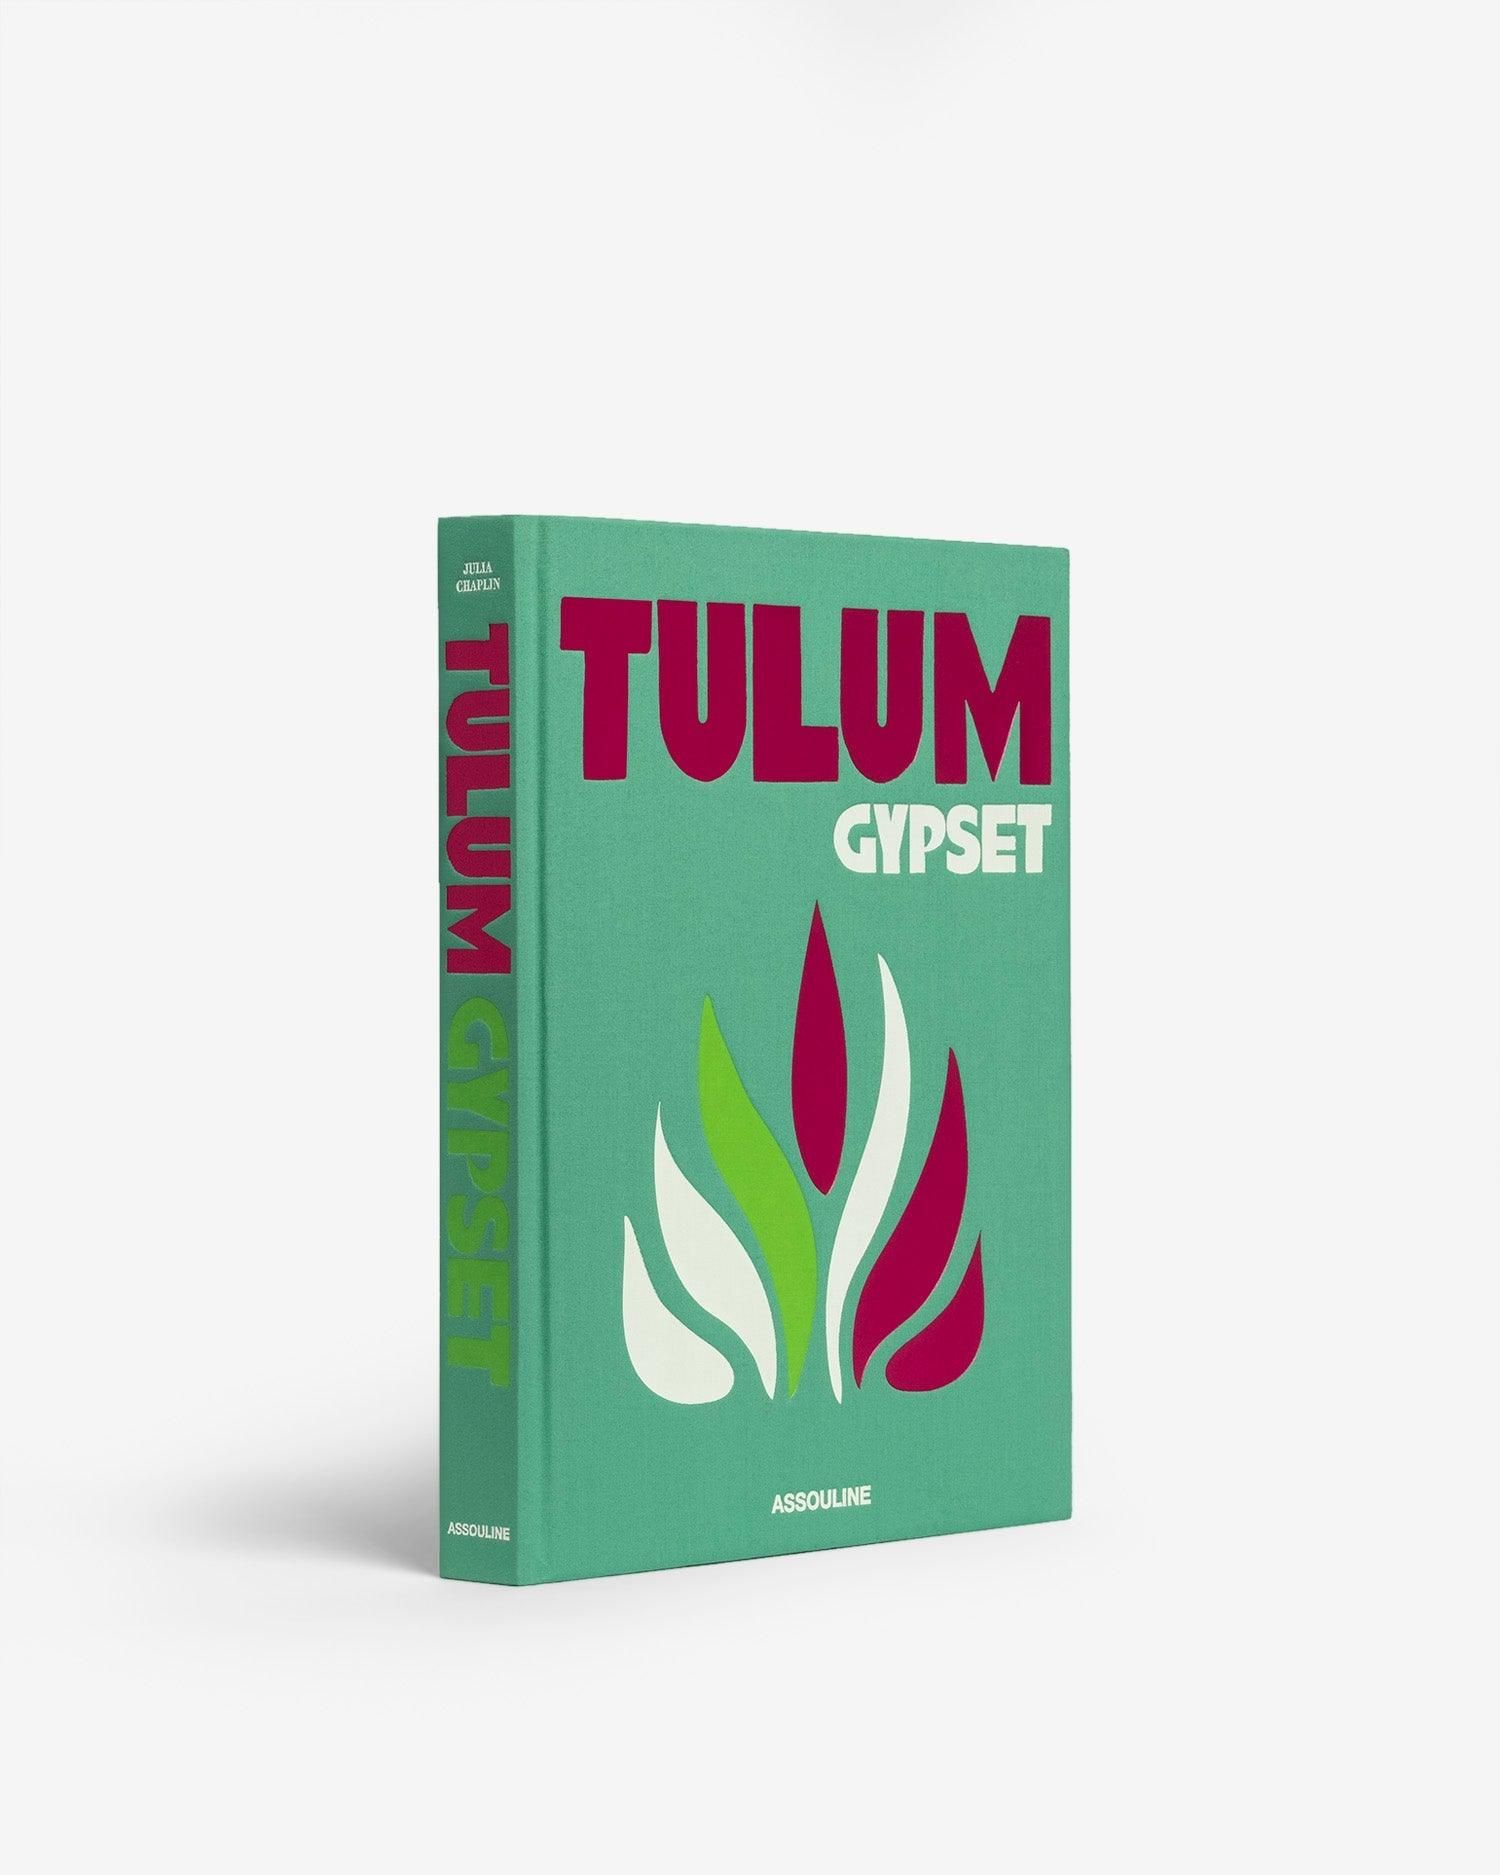 Tulum Gypset book by Julia Chaplin - Coffee Table Book | ASSOULINE | Assouline